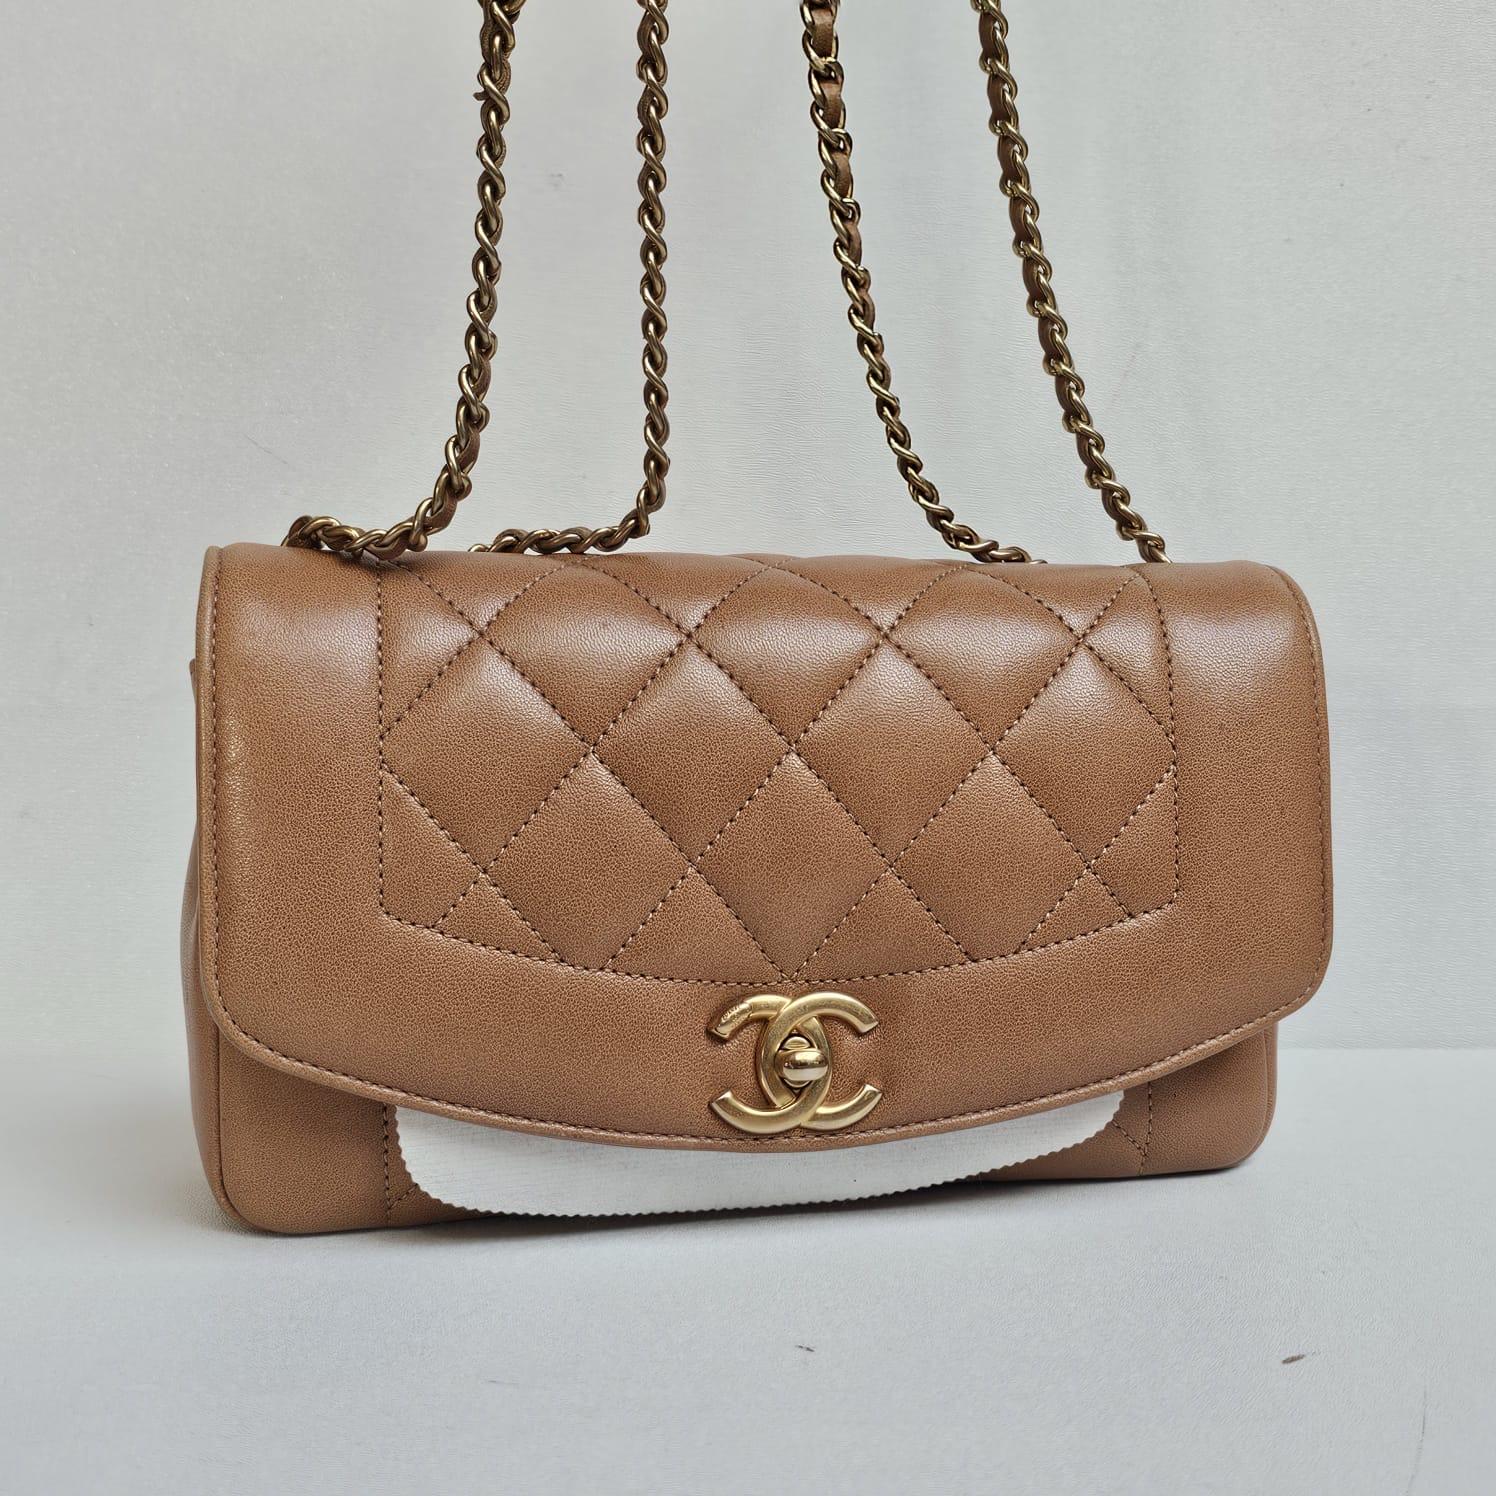 2014-2015 Chanel Caramel Diana Flap Bag For Sale 8